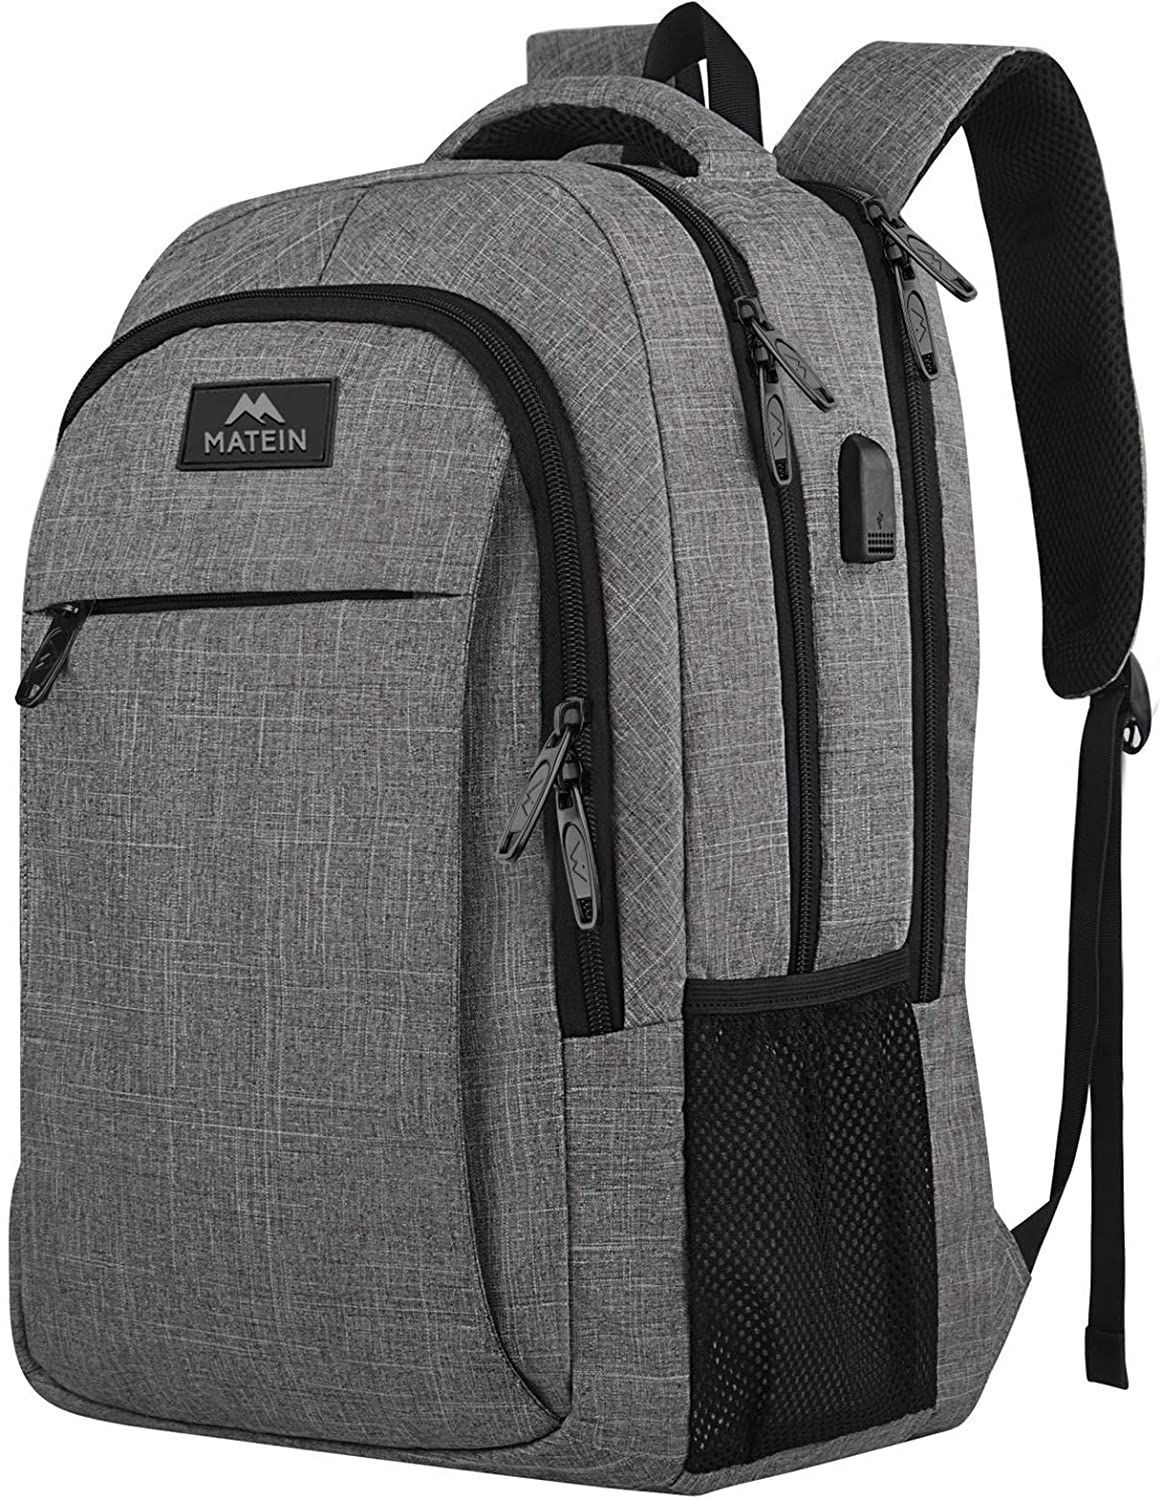 Matein Backpack Design 1